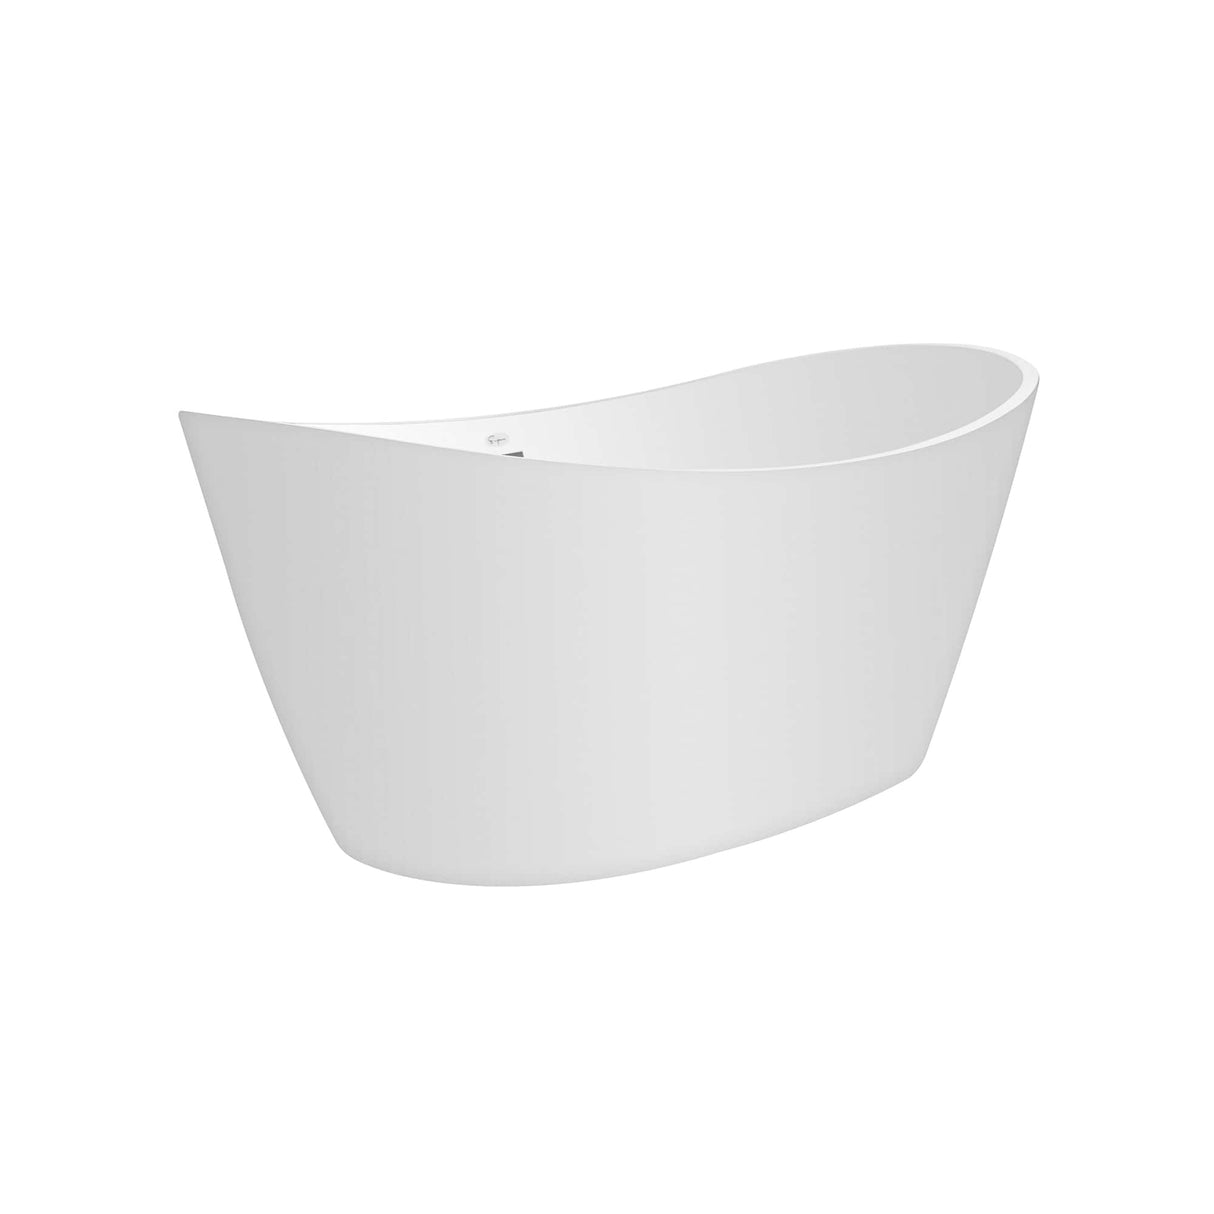 Empava-59FT1518LED freestanding acrylic soaking oval modern white bathtub with LED Lights